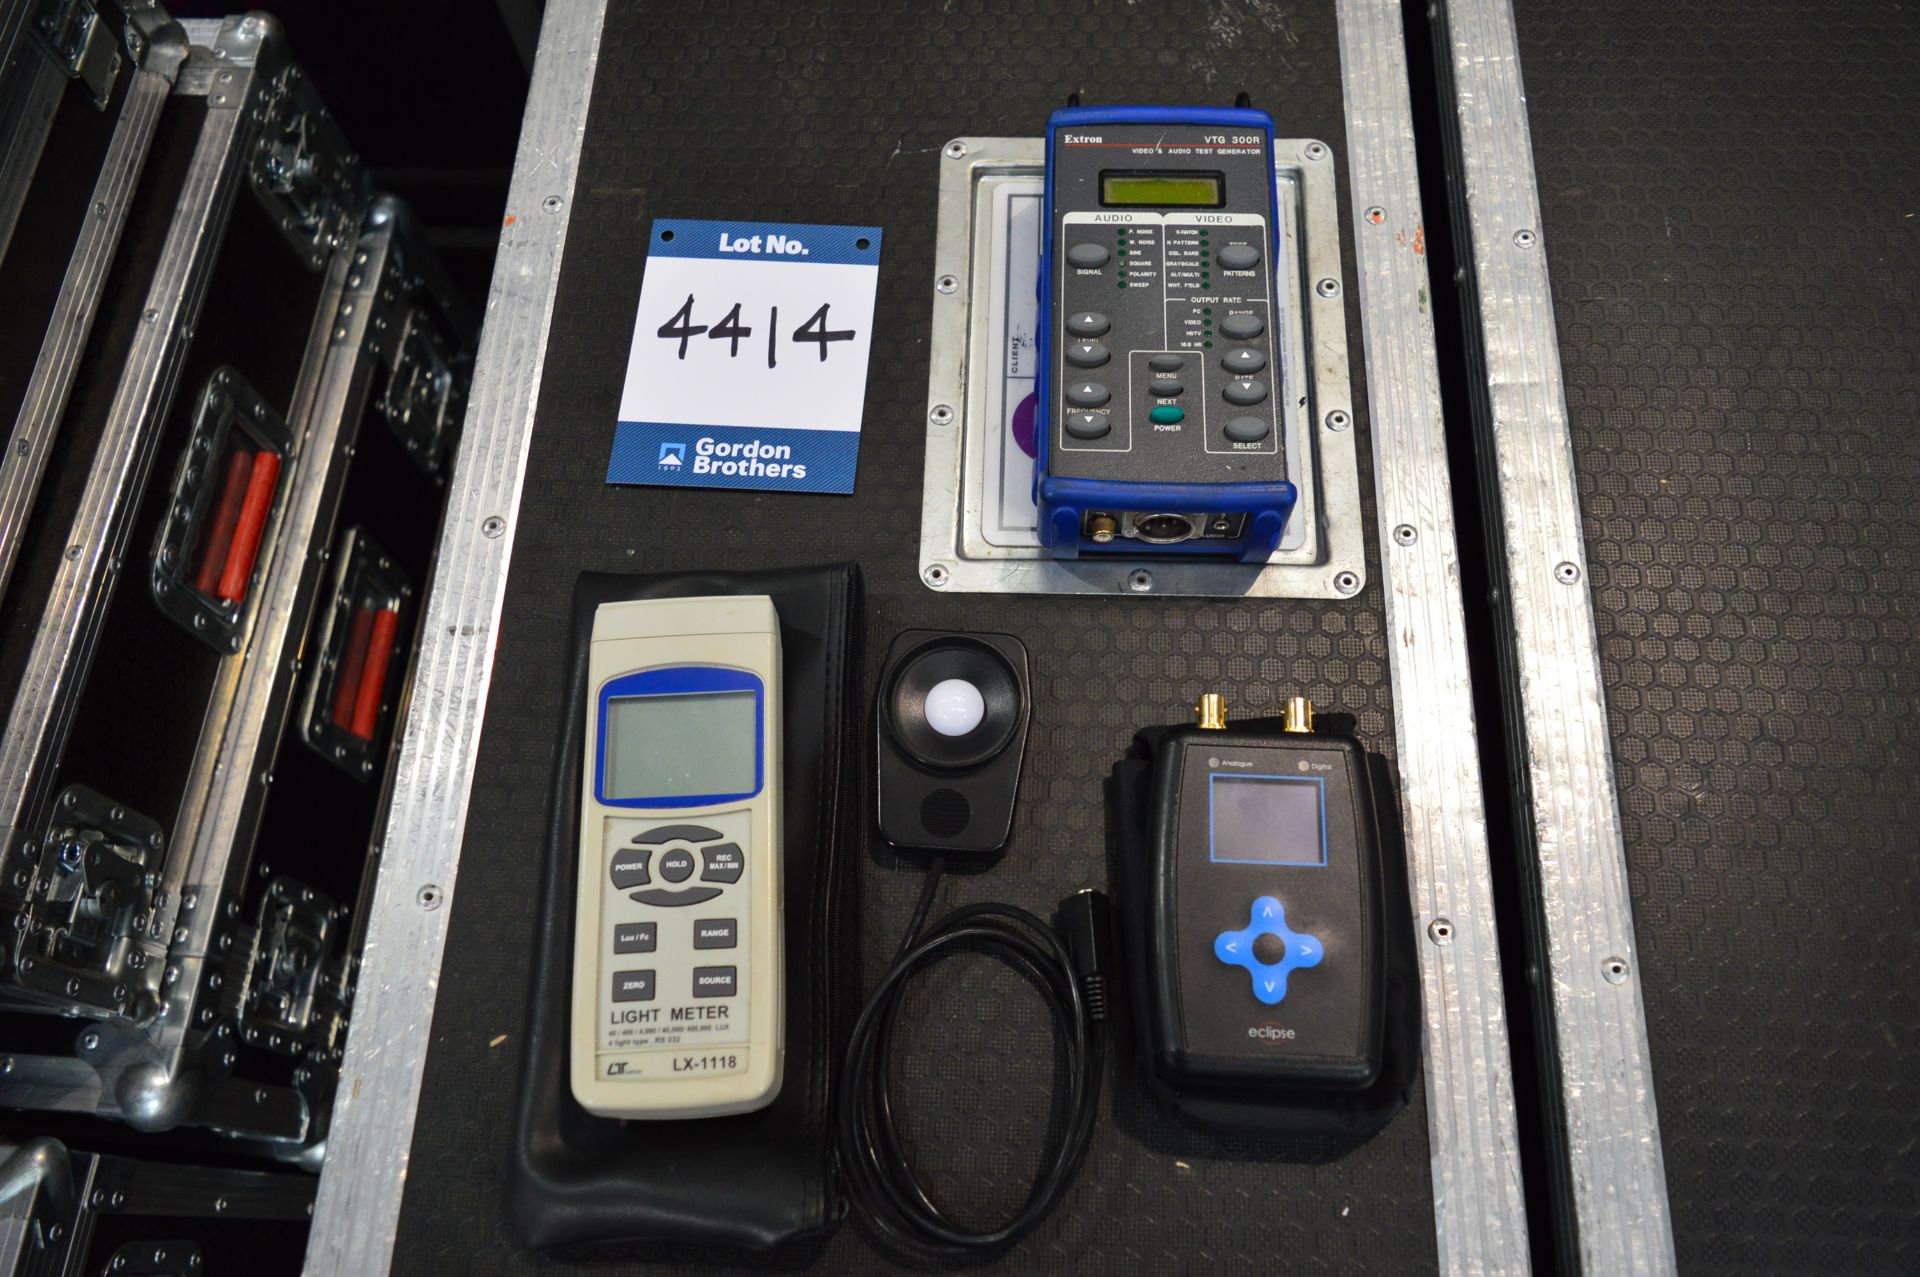 1x Extron VTG 300R video & audio test generator, 1x Lutron LX-1118 light meter and 1x Eclipse test